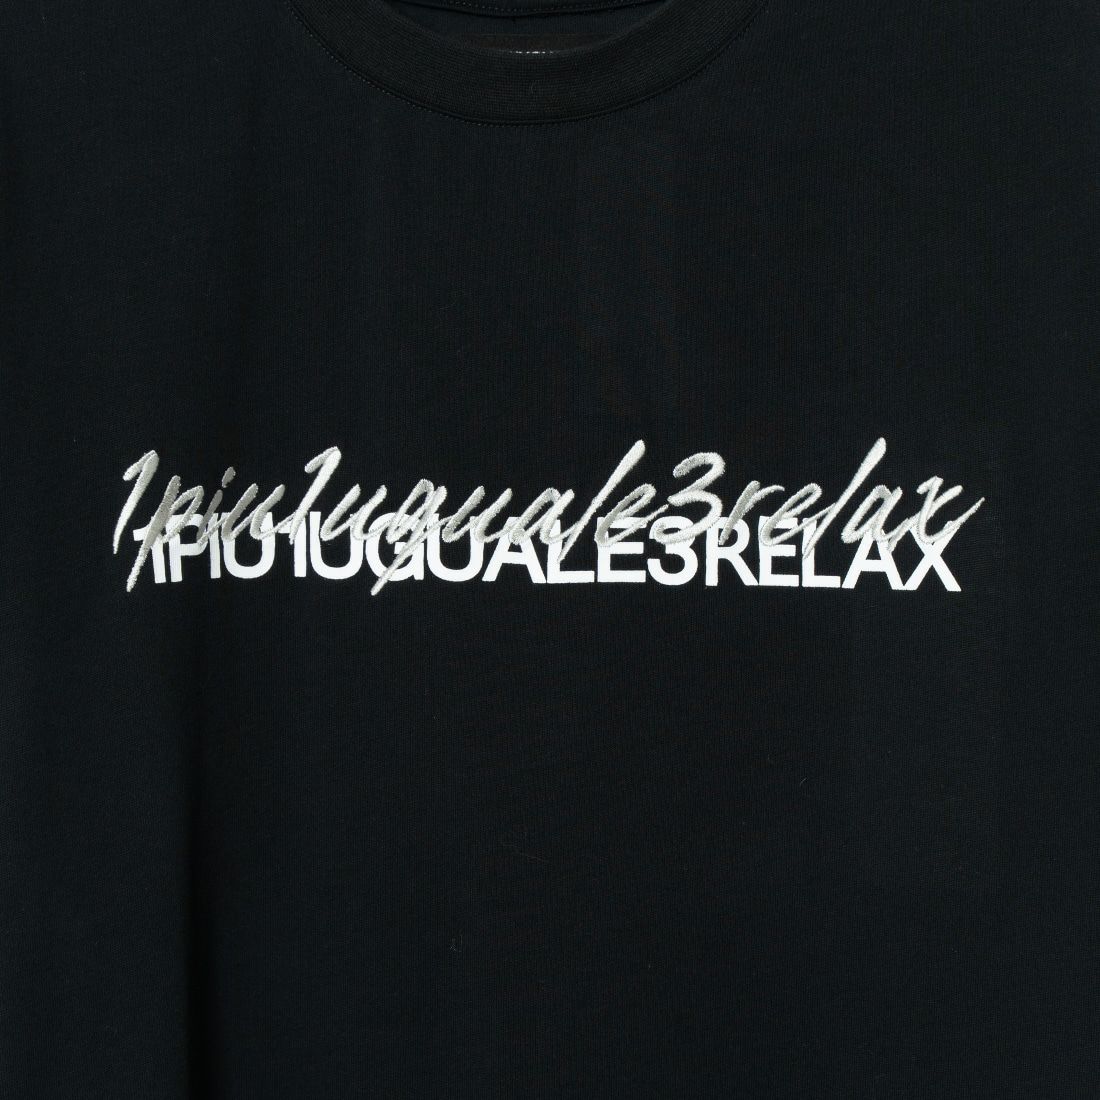 1PIU1UGUALE3 RELAX [ウノ ピゥ ウノ ウグァーレ トレ] ダブルロゴ半袖Tシャツ [UST-24003] SN90 BLACK